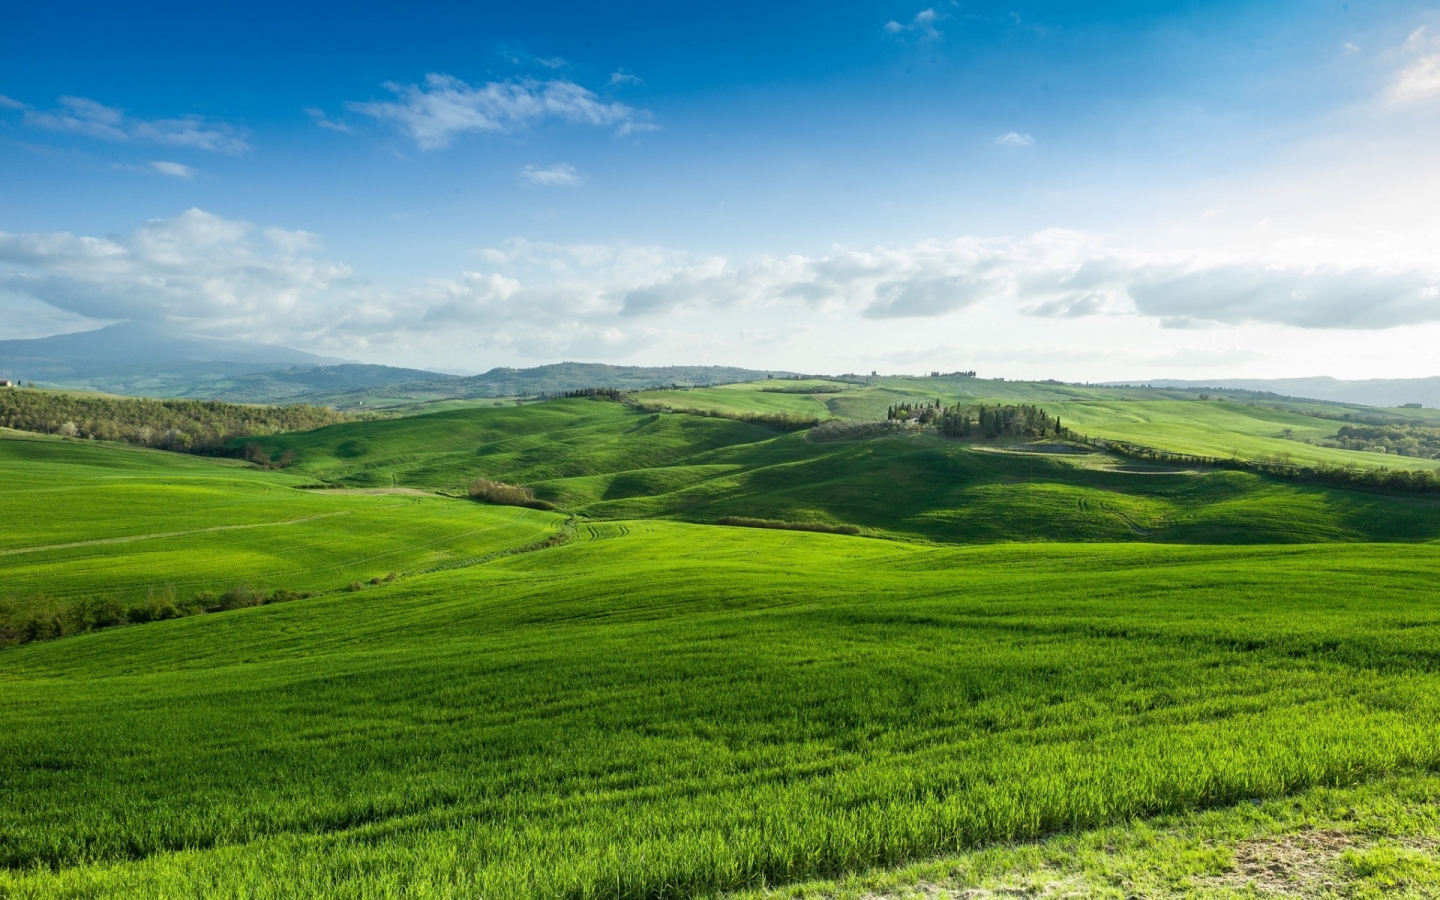 Beautiful Green Lands for 1440 x 900 widescreen resolution